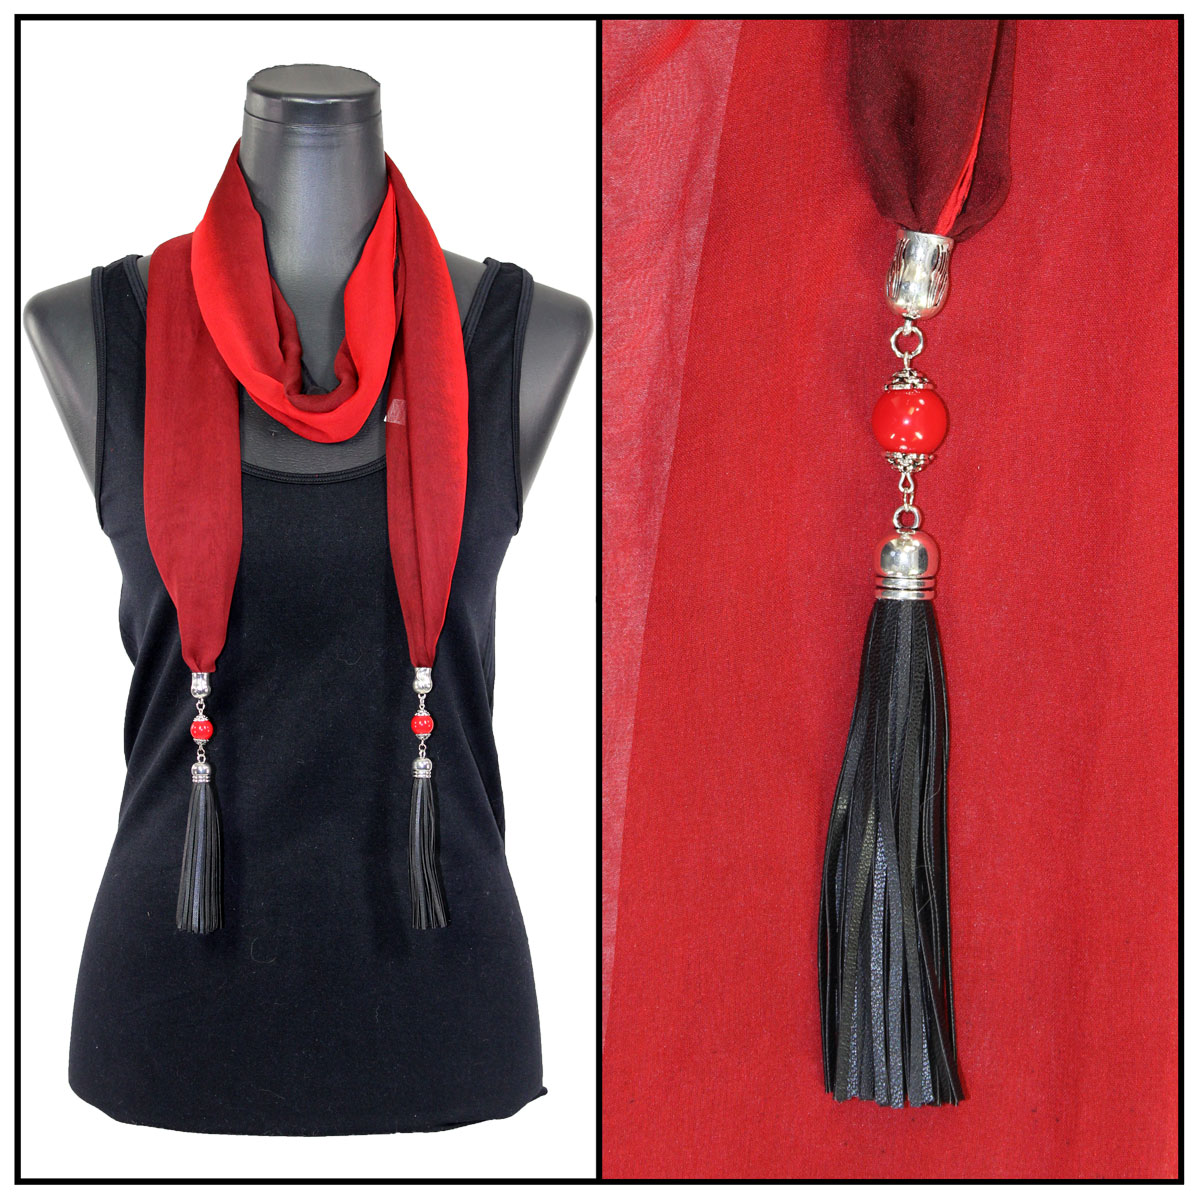 Tri-Color - Black-Maroon-Red<br>
Leather Tassels